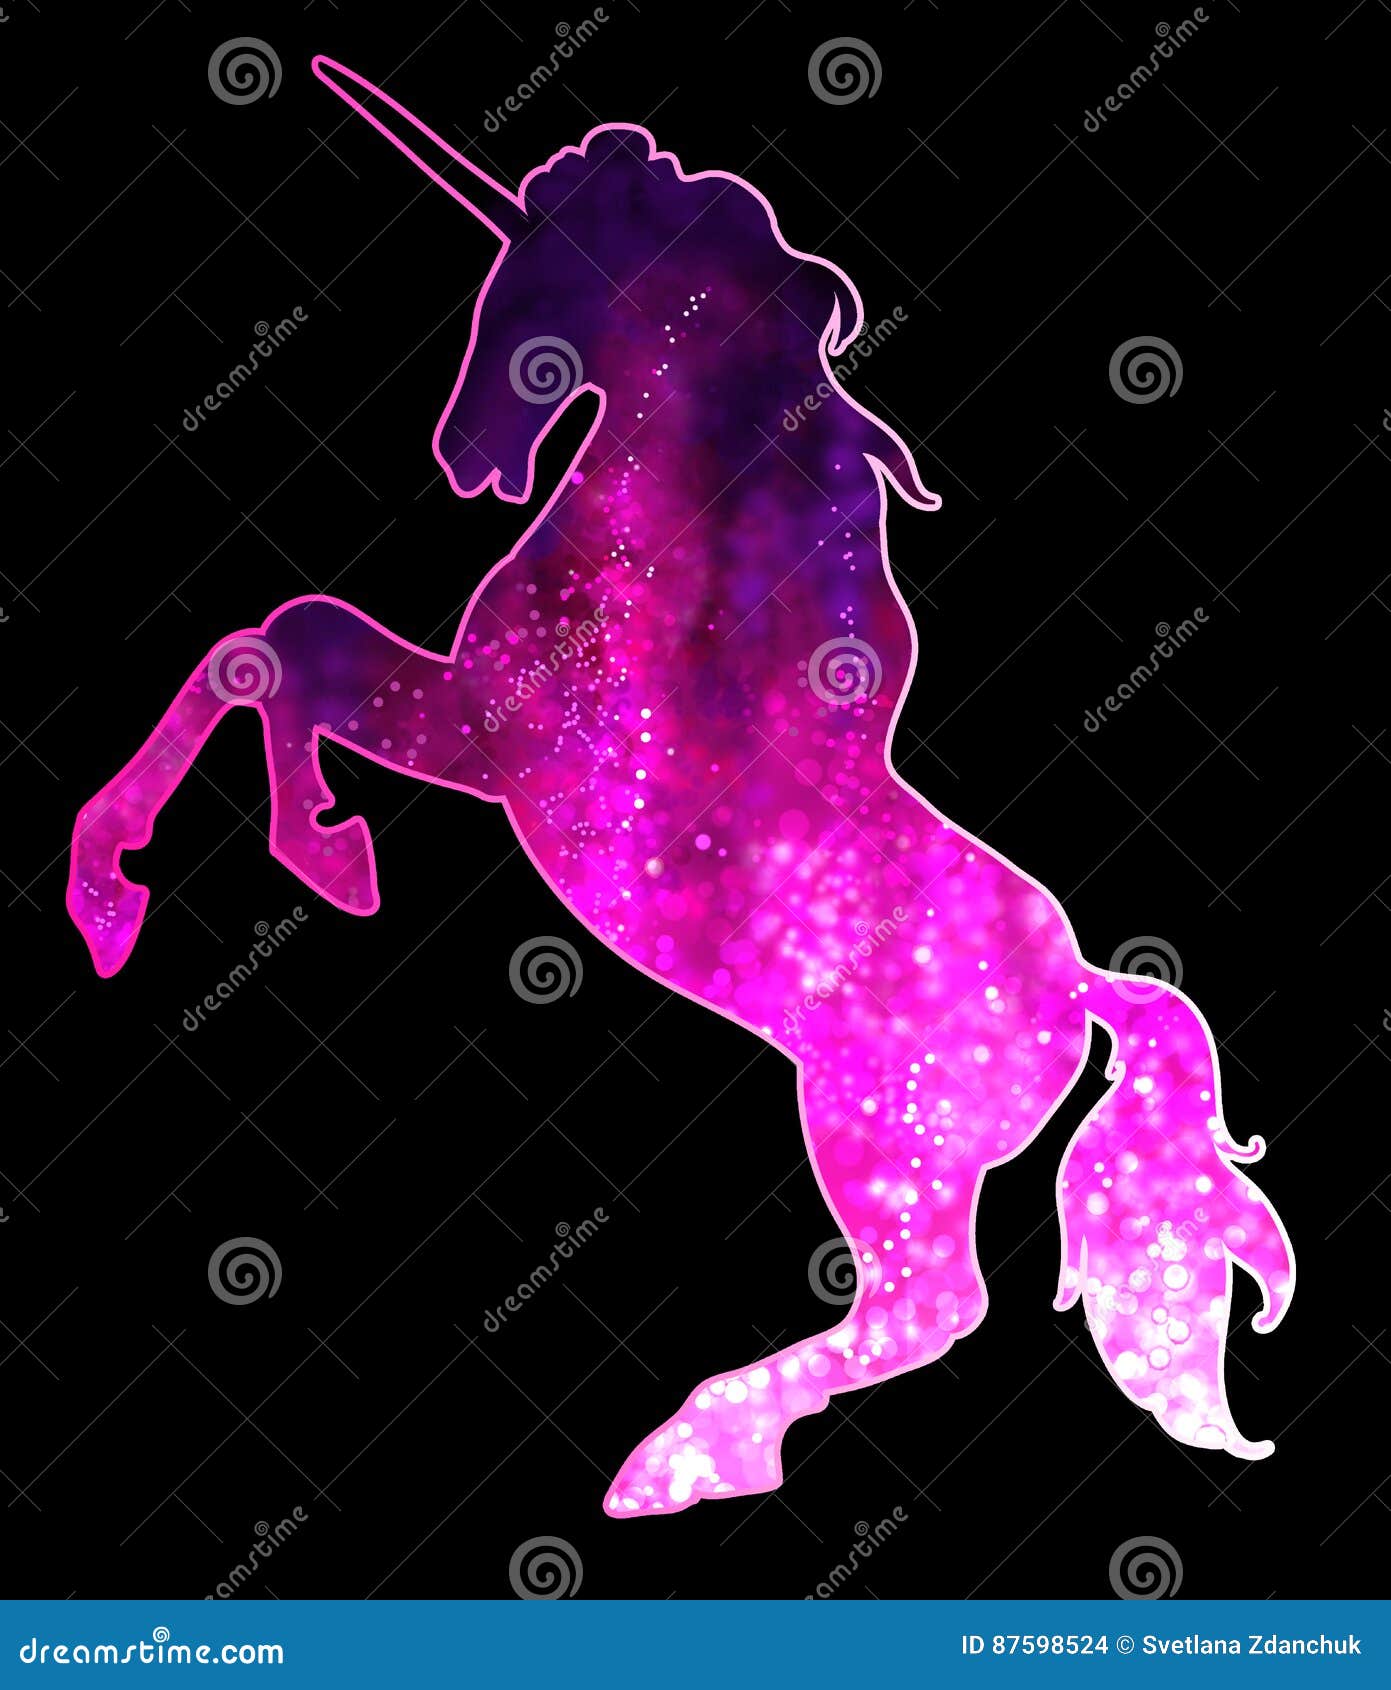 unicorn silhouette icon logo with rainbow